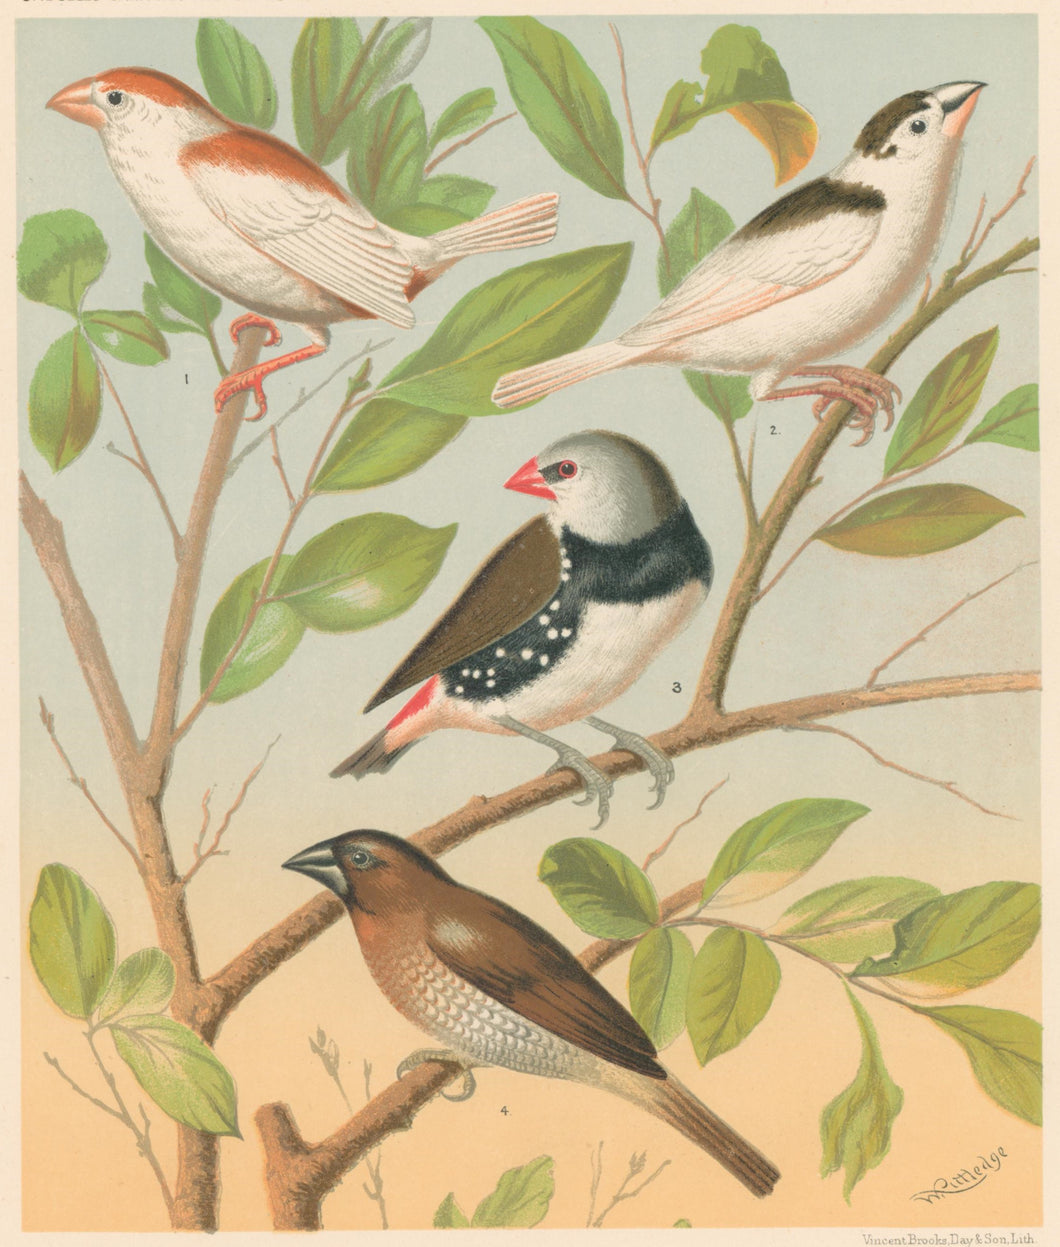 Rutledge, W. “Pied Mannikin (Fawn & White), Pied Mannikin (Chestnut & White), Spotted Sided Finch or Diamond Sparrow, Nutmeg or Spice-Bird